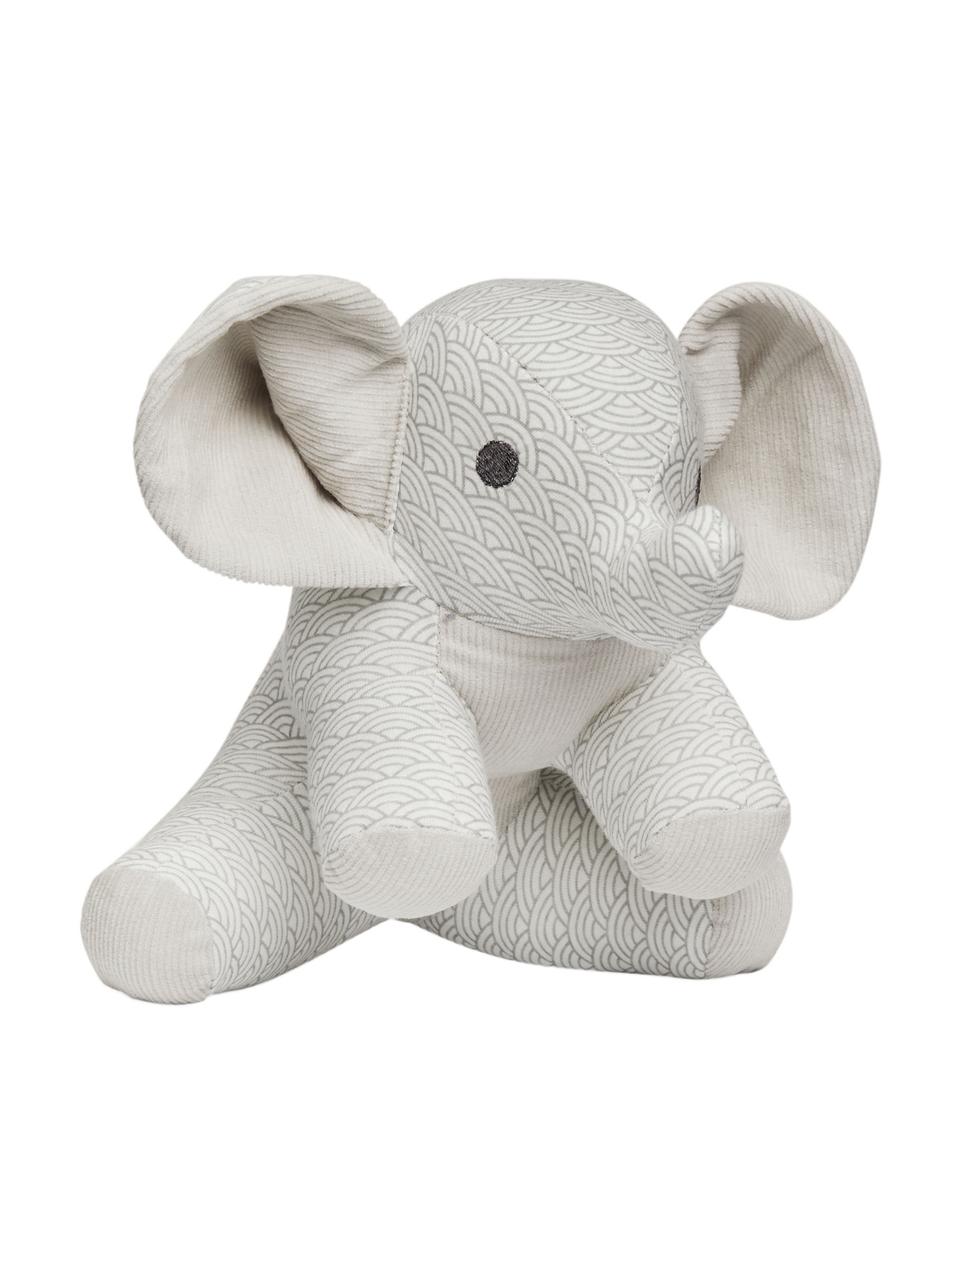 Plyšové zvířátko z organické bavlny Elephant, Šedá, bílá, světle šedá